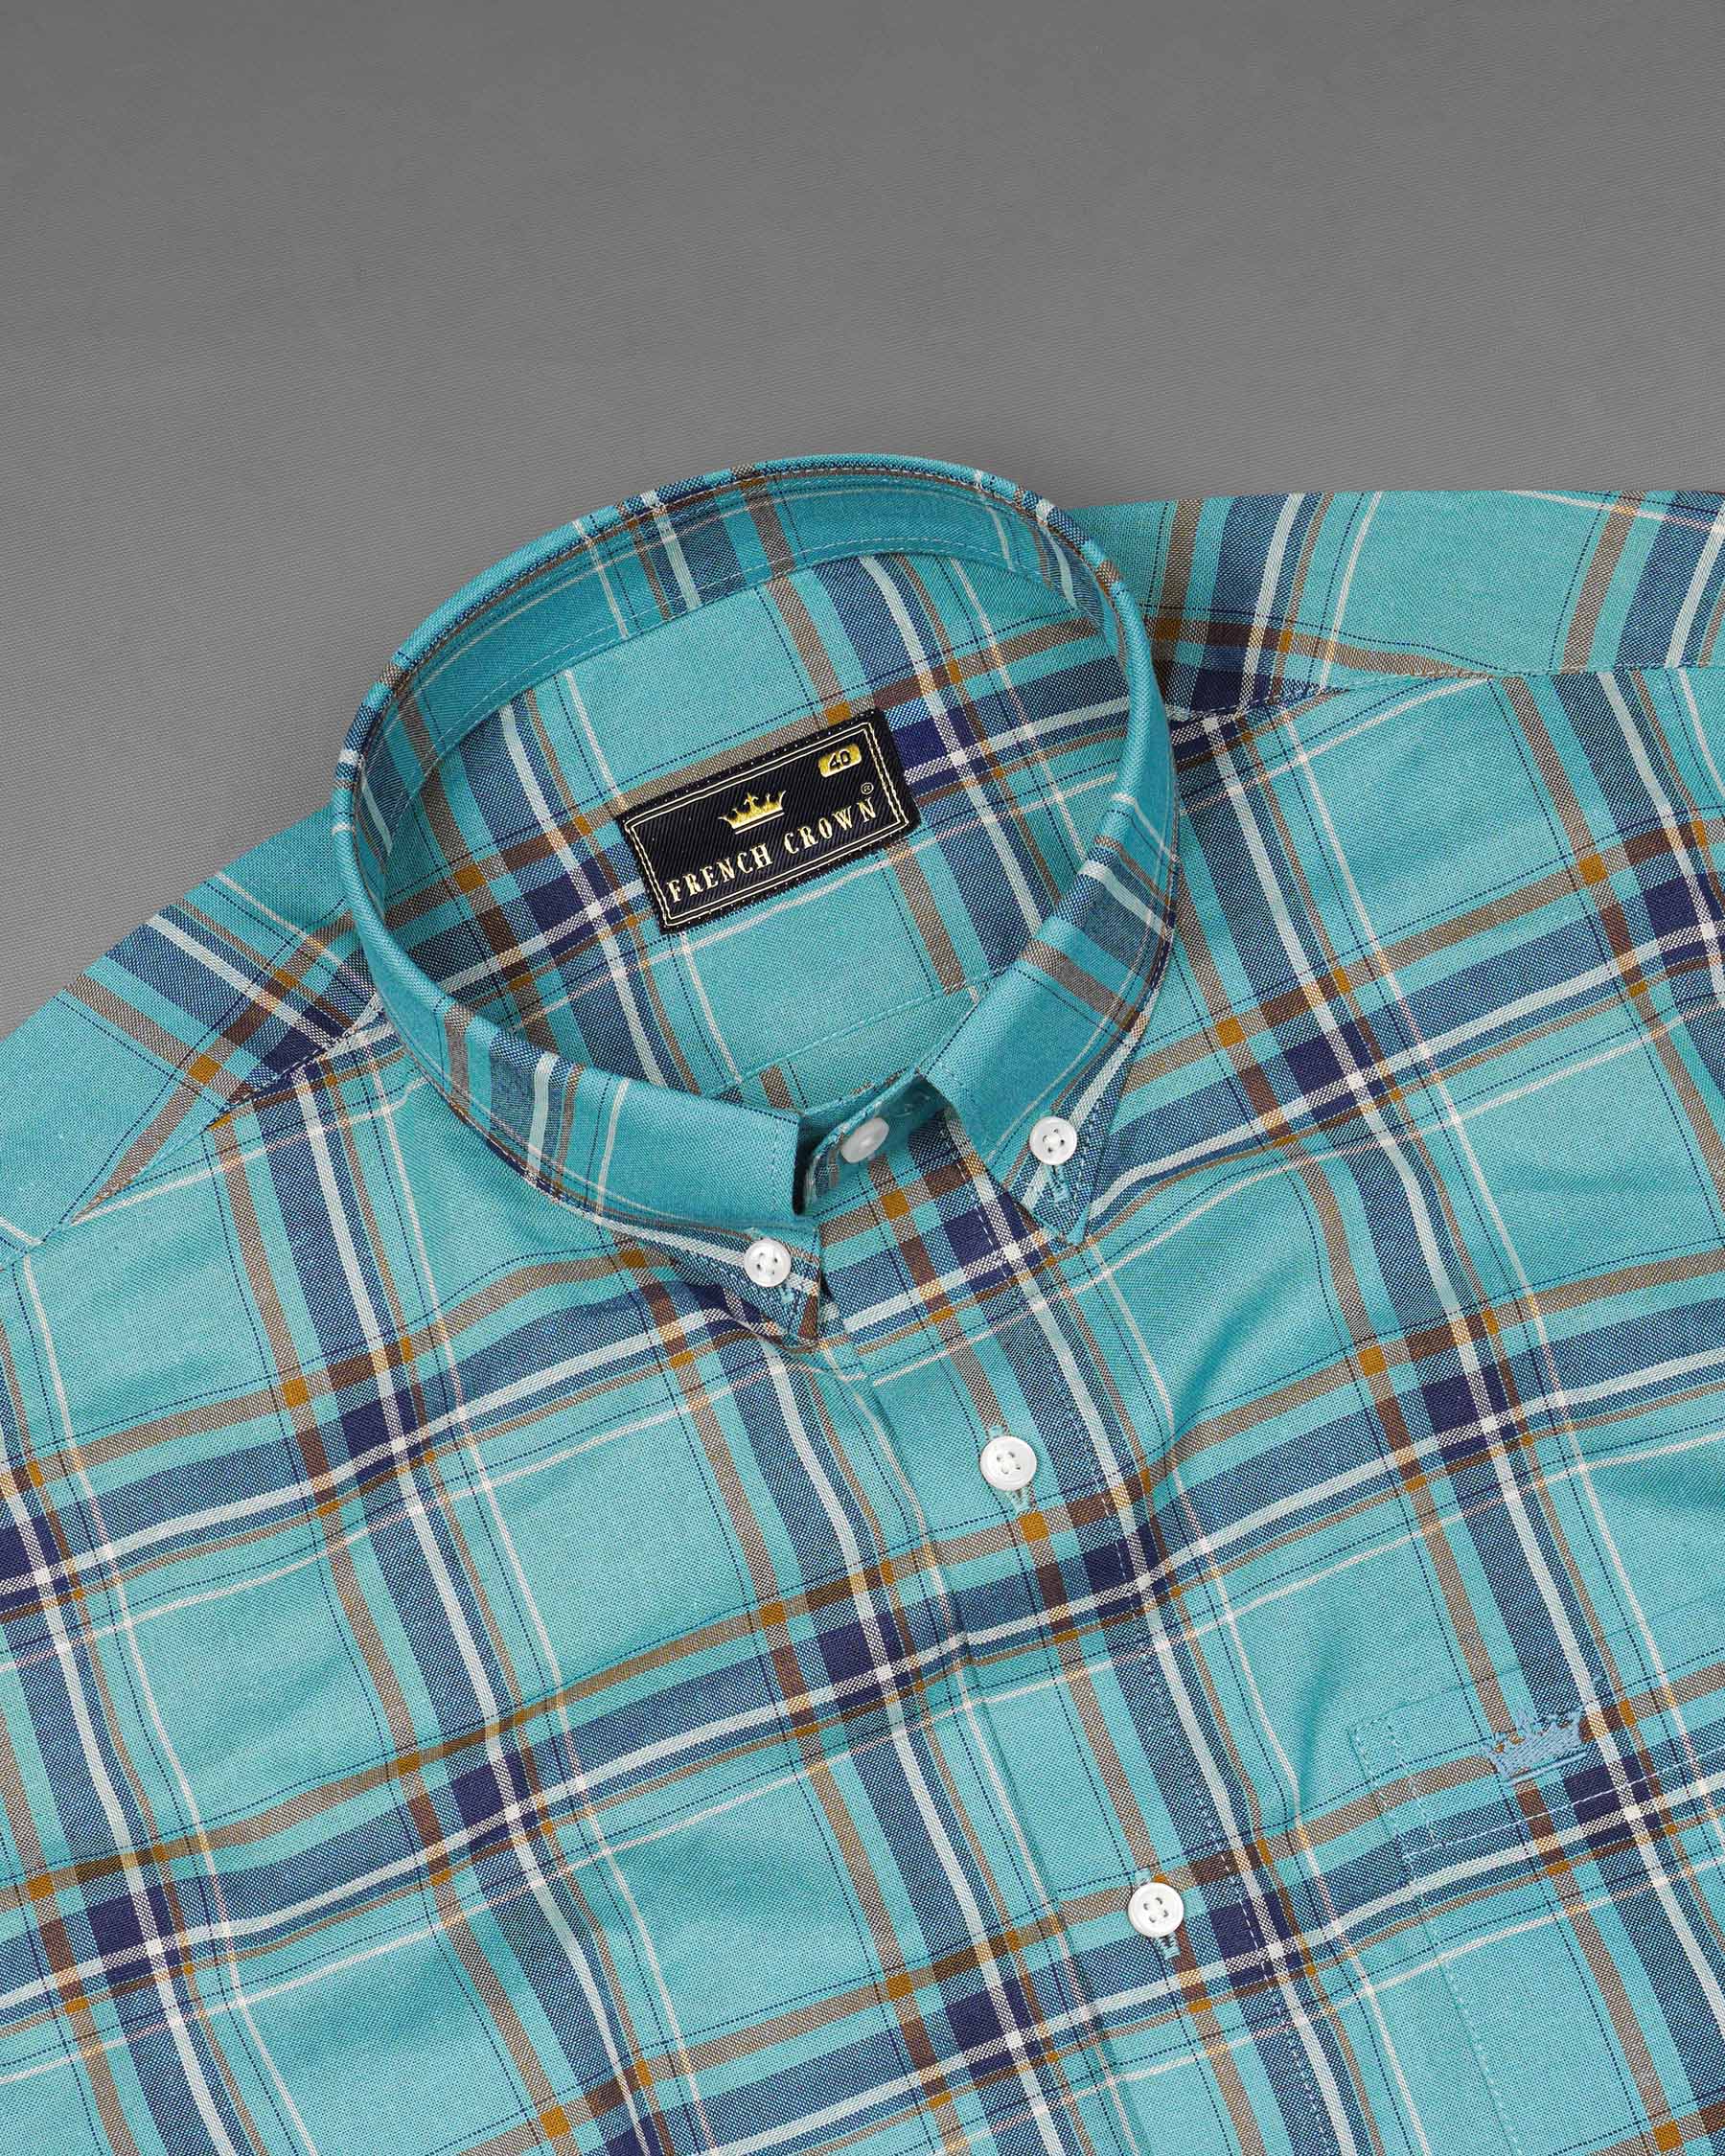 Neptune Blue Plaid Royal Oxford Shirt